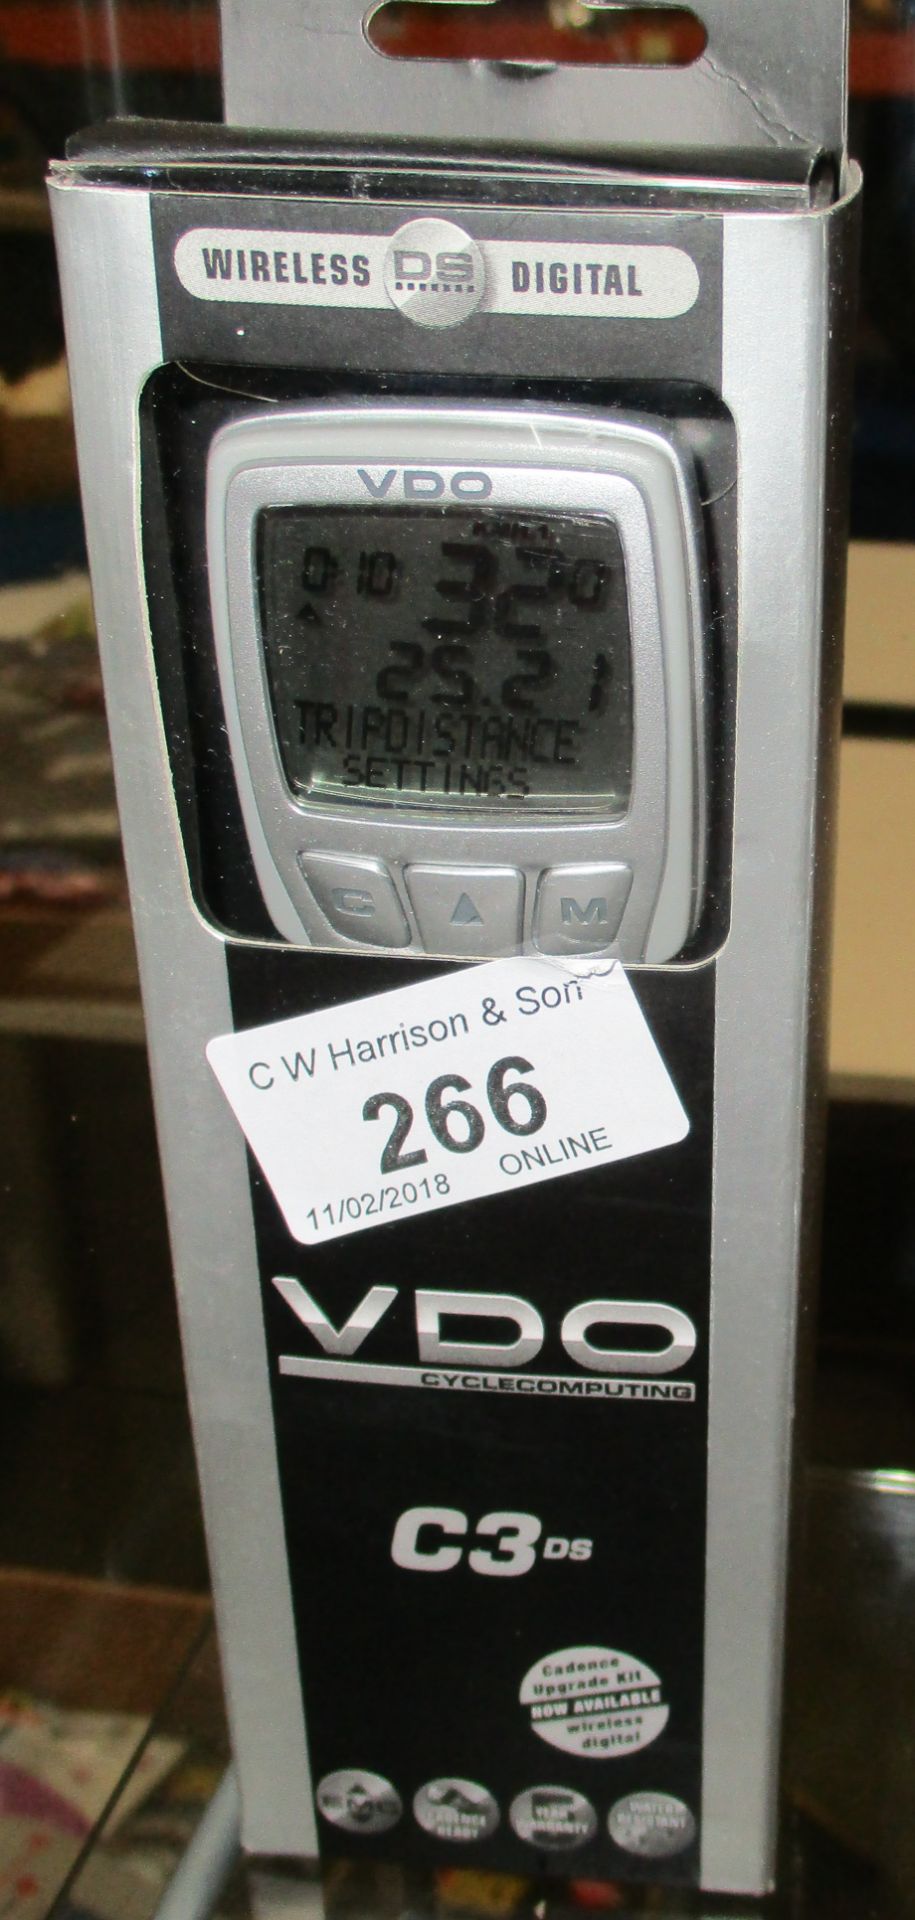 A VDO C3 D5 wireless digital computer